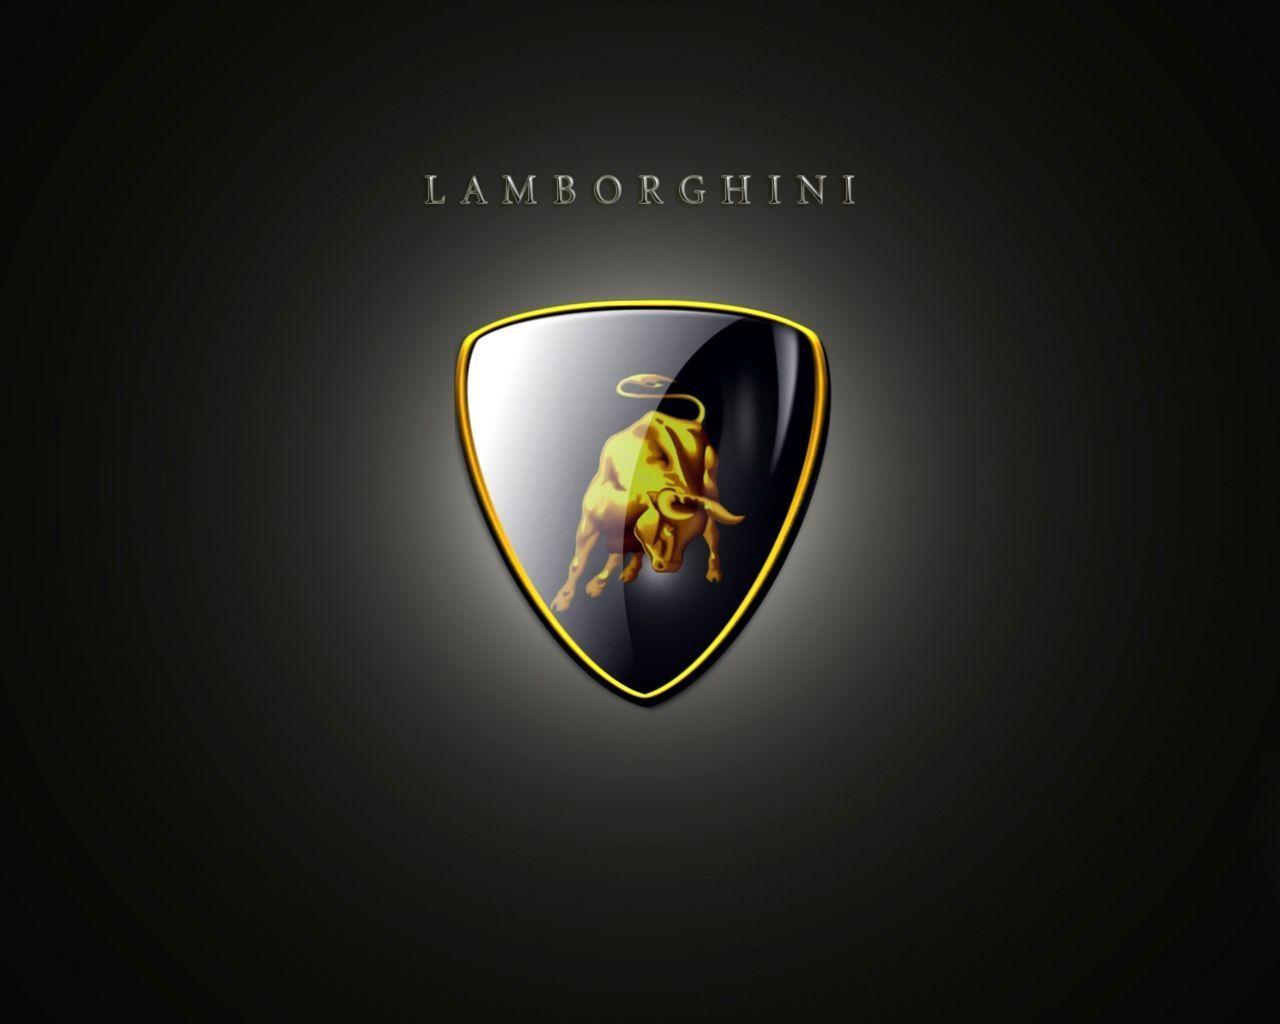 Wallpaper Lamborghini Car Picture IMAGES STOCKS PHOTOS